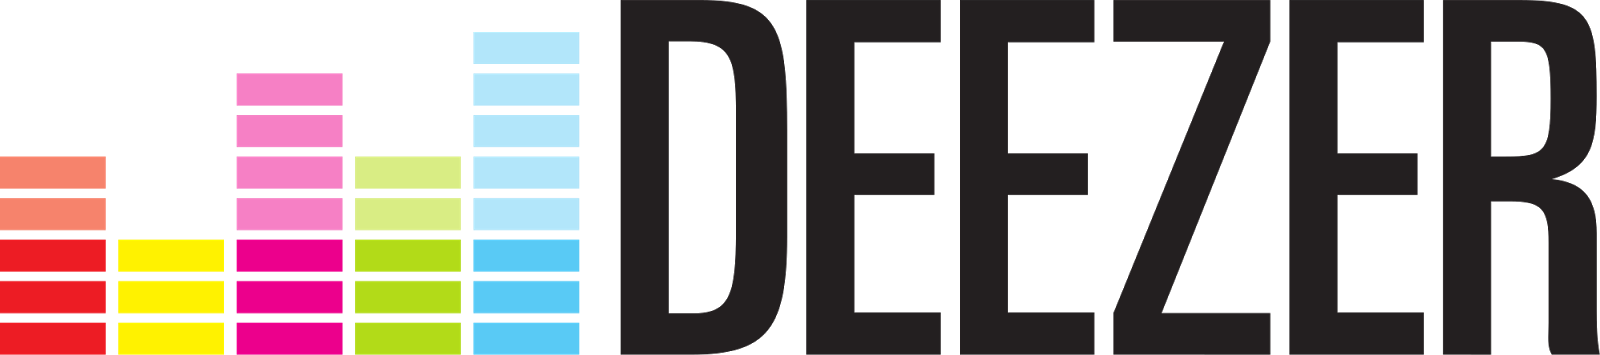 Deezer logo png - desklomi